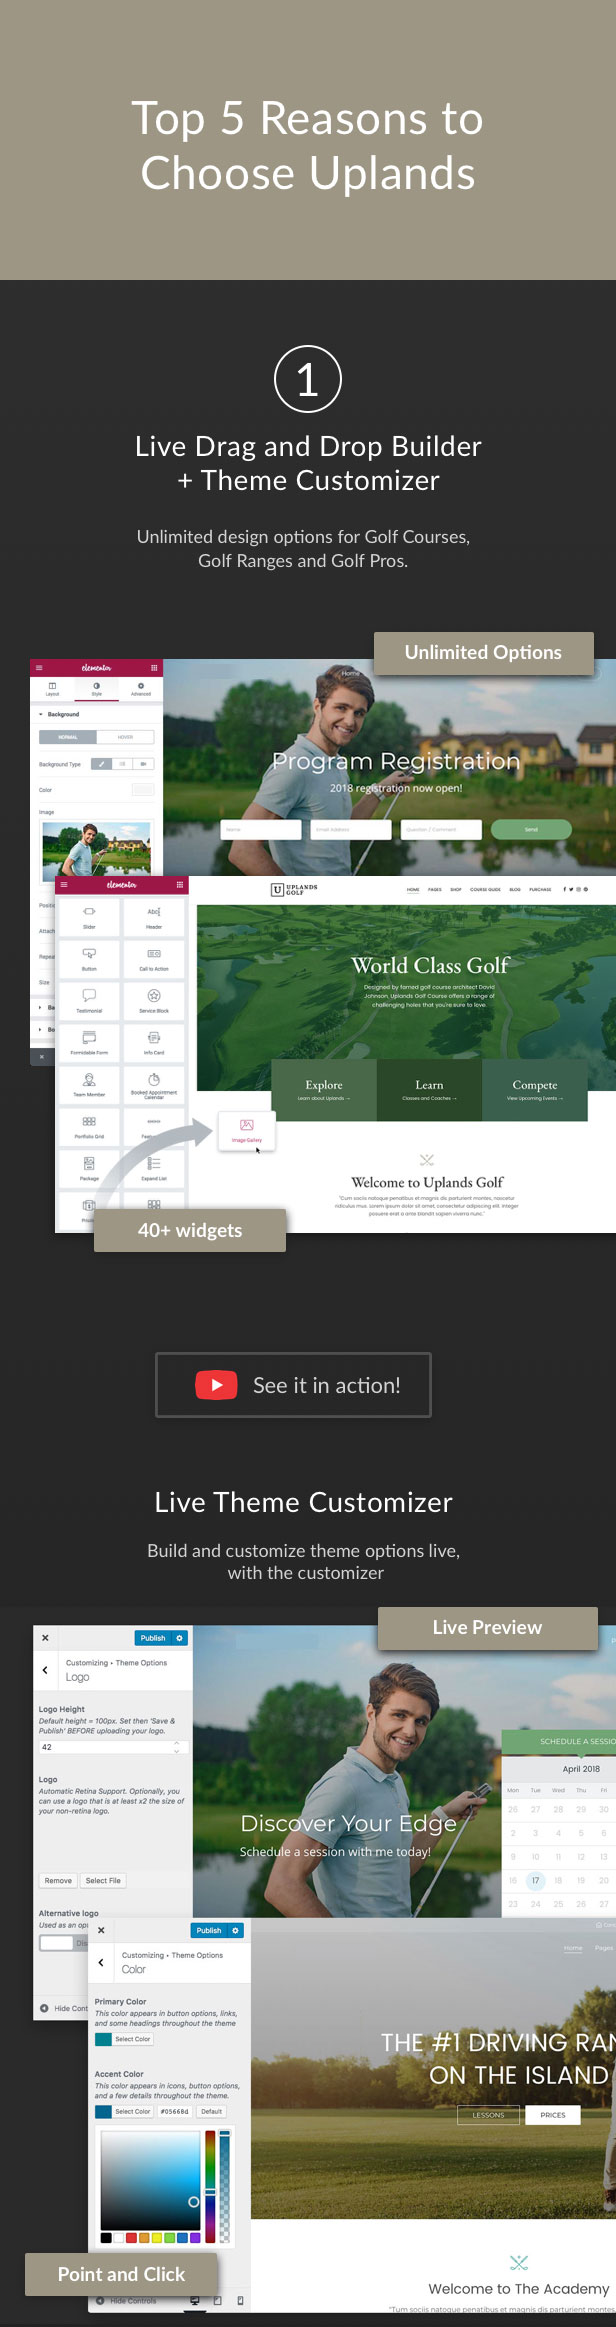 Uplands - Golf Course WordPress Theme - 1